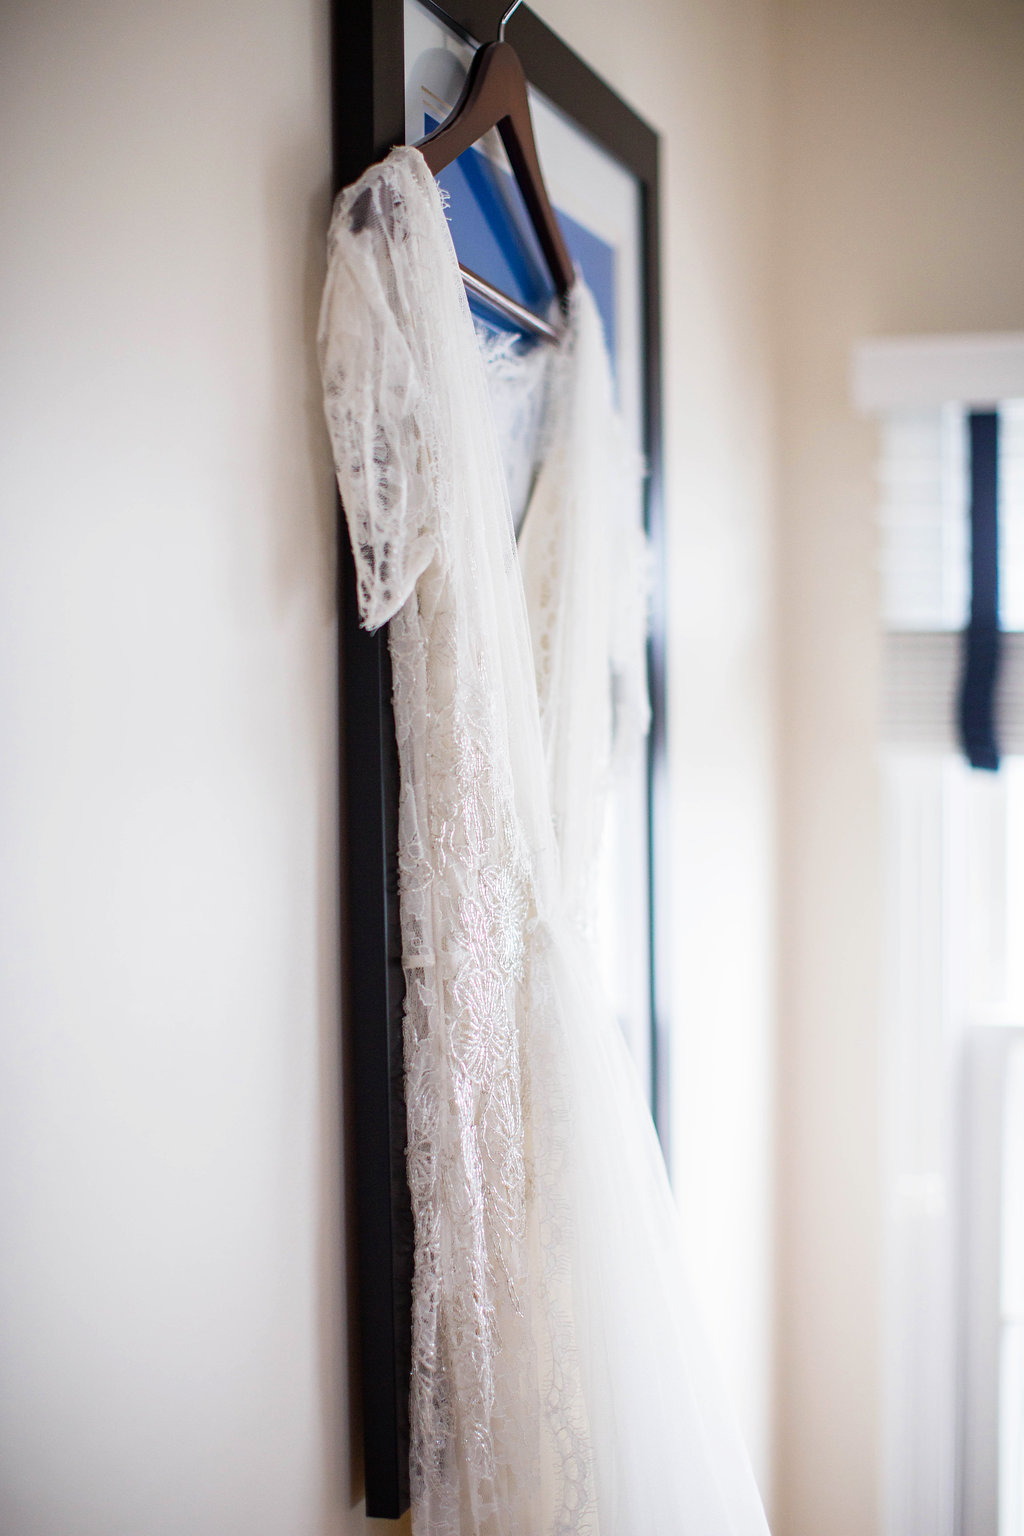 Linden Place Rhode Island Wedding — The Overwhelmed Bride Wedding Blog